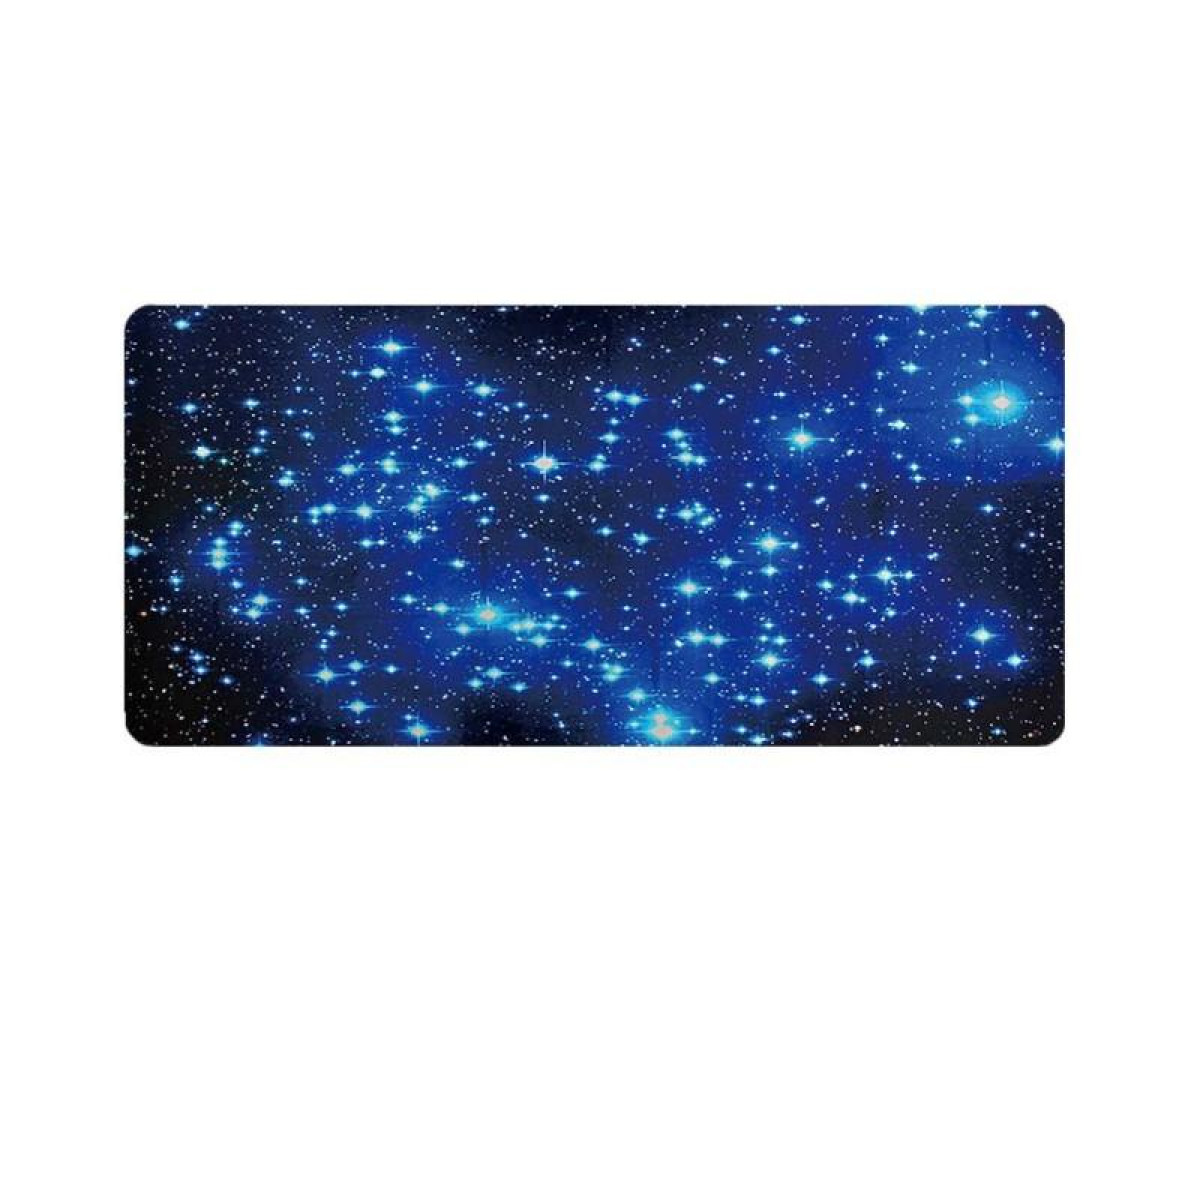 INF Großes Mauspad mit Sternenhimmelmuster cm Schwarz/Blau (0,2 Mauspad cm x 80 cm) 30x80